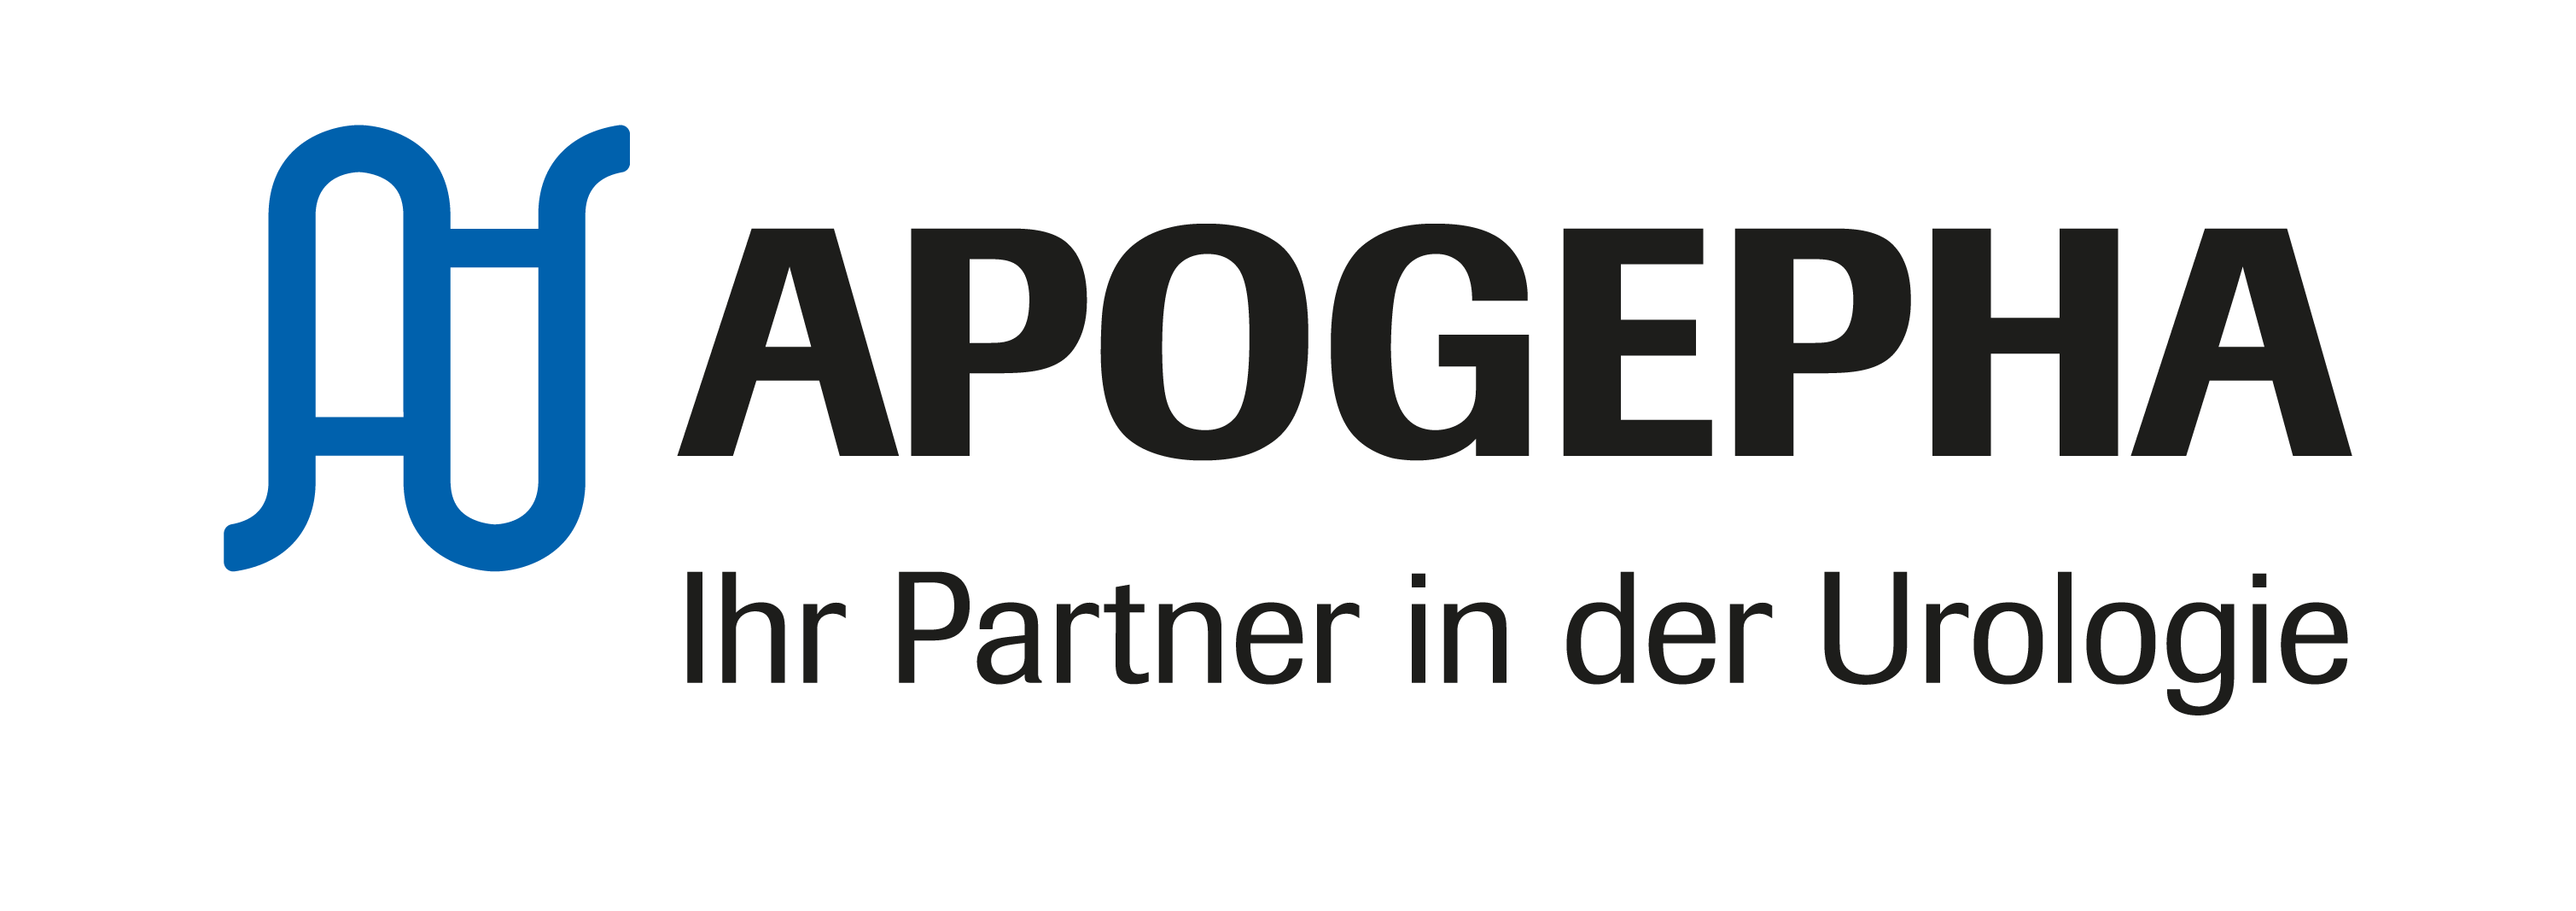 apogepha logo mit schutzraum rgb